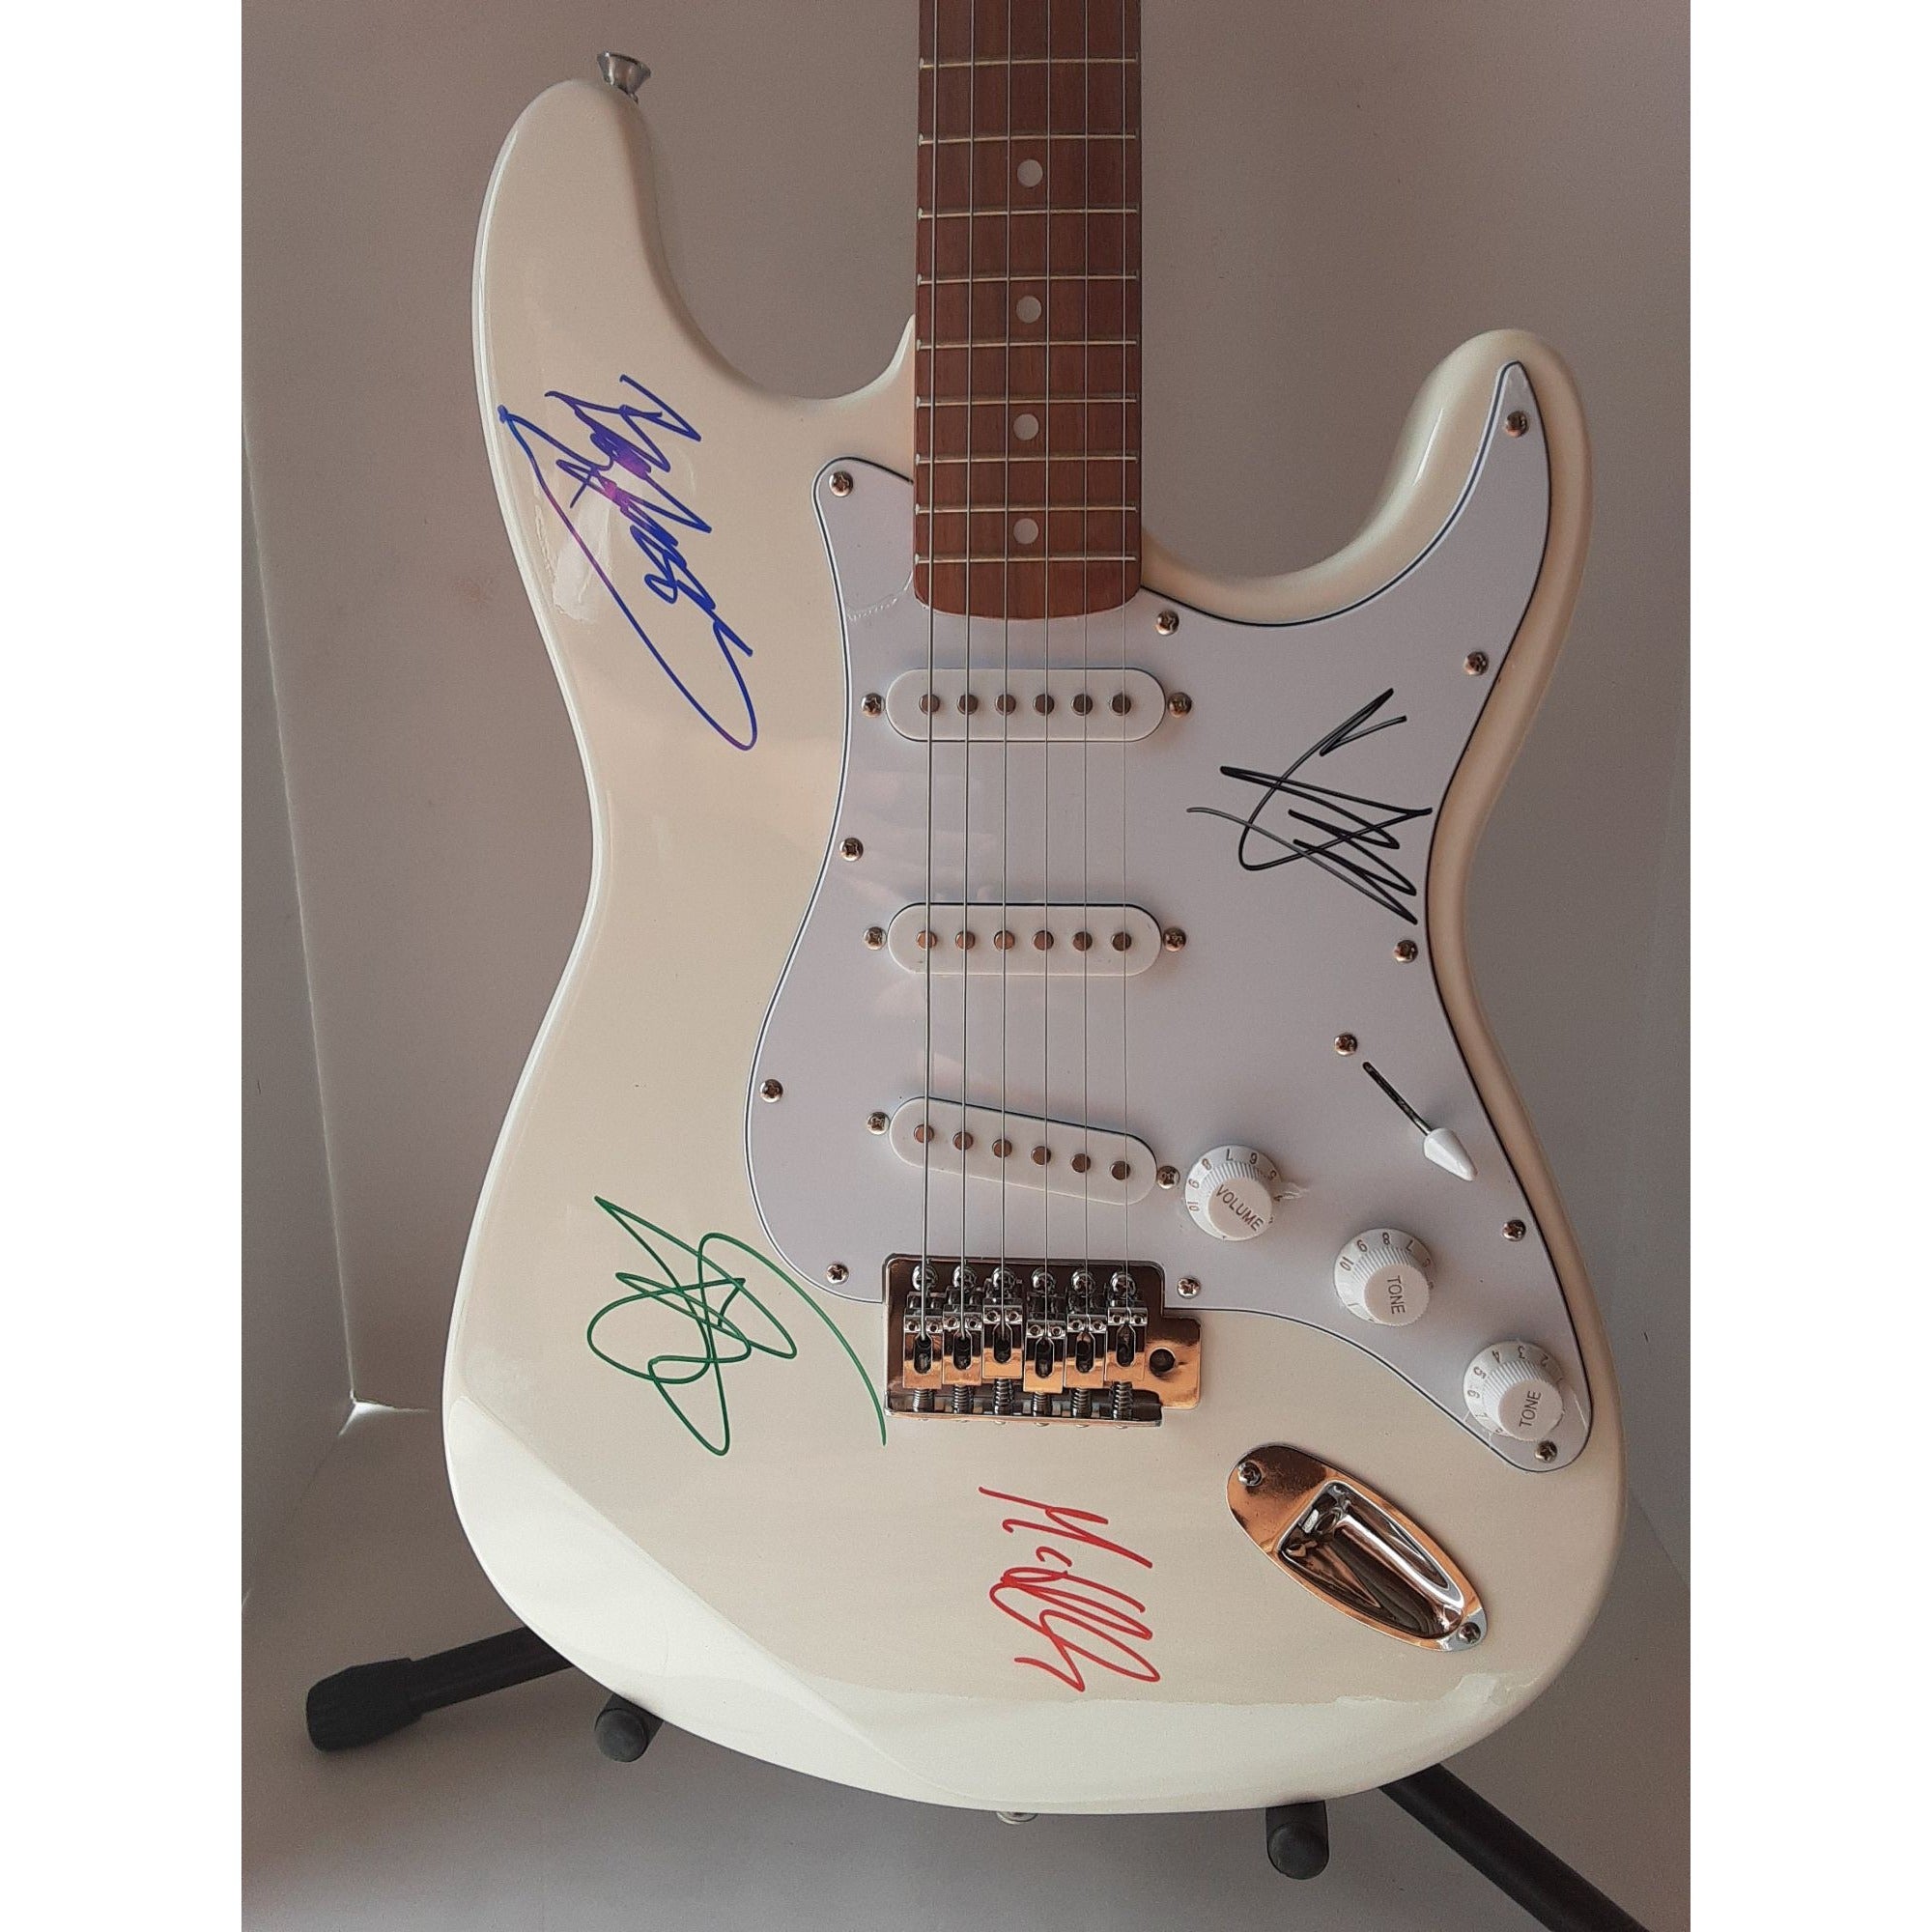 Soundgarden Chris Cornell, Ben Shepherd, Matt Cameron, Kim Thayil signed guitar with proof